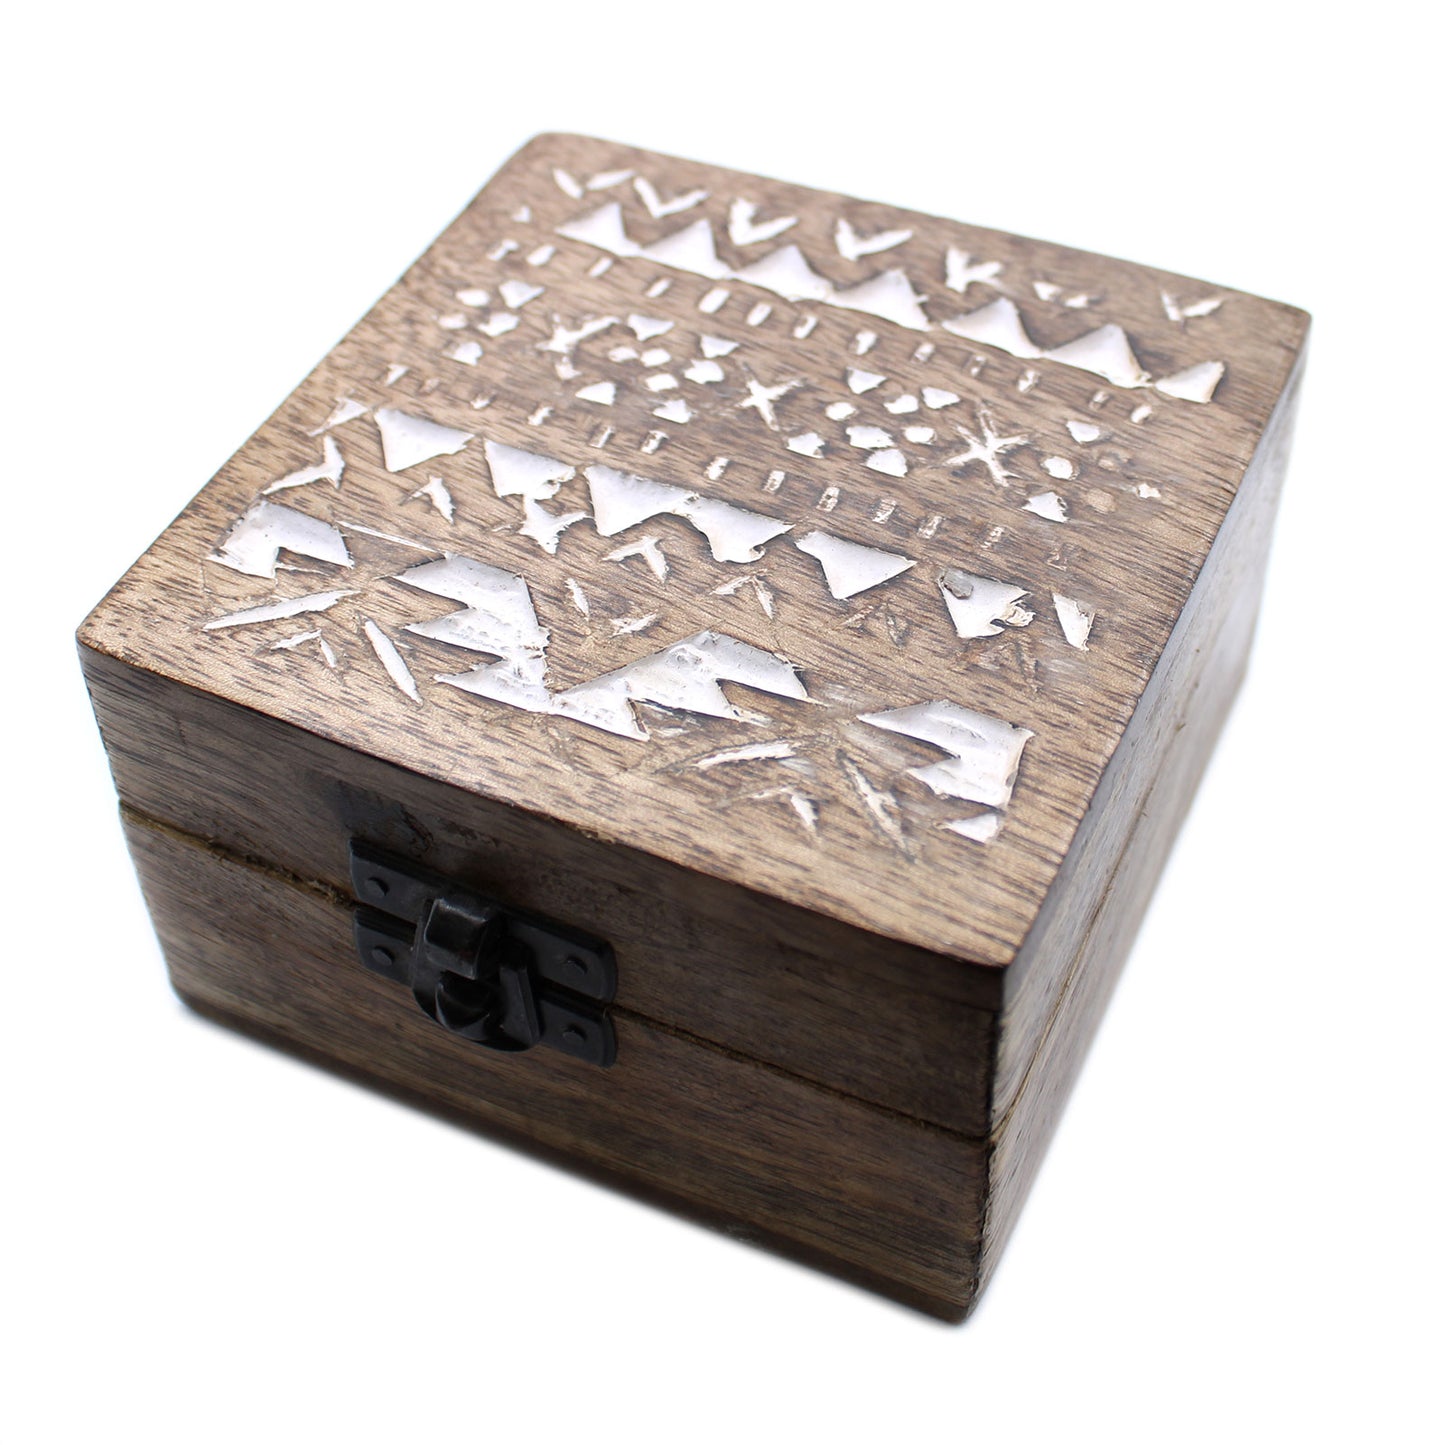 White Washed Wooden Box - 4x4 Slavic Design